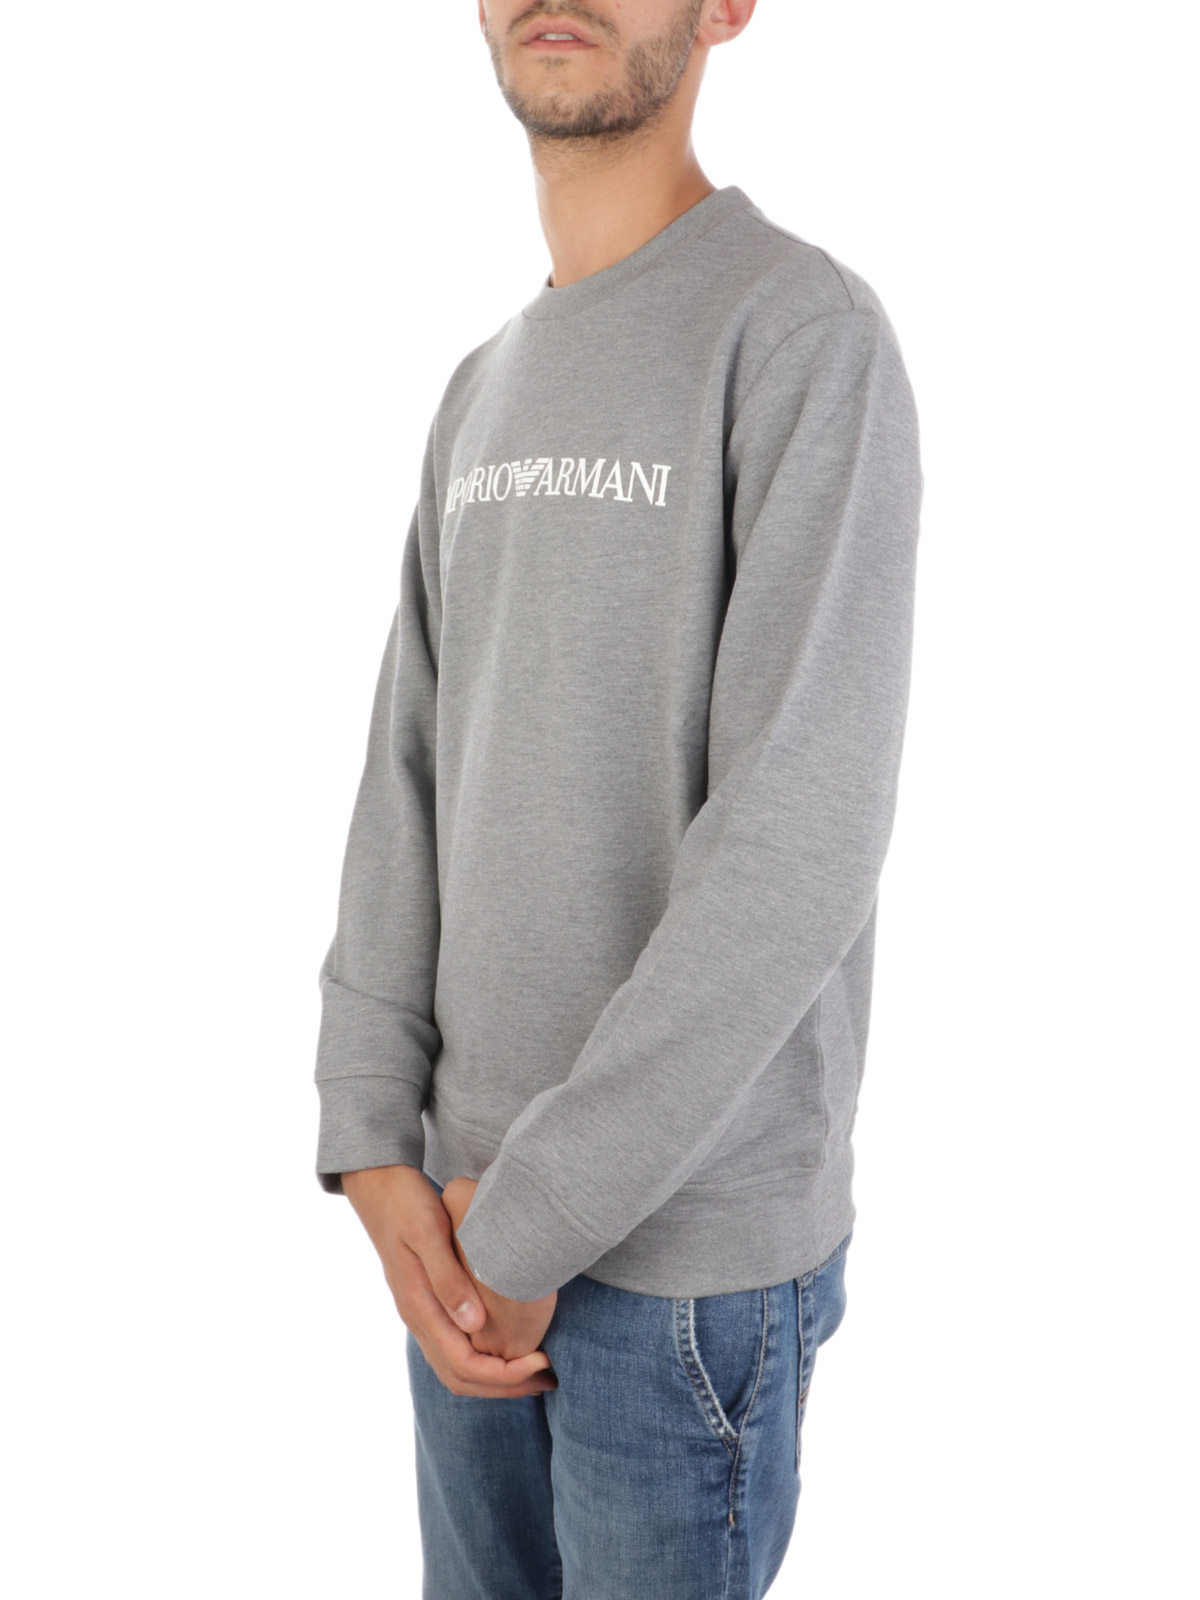 Picture of EMPORIO ARMANI | Men's Embossed Logo Sweatshirt